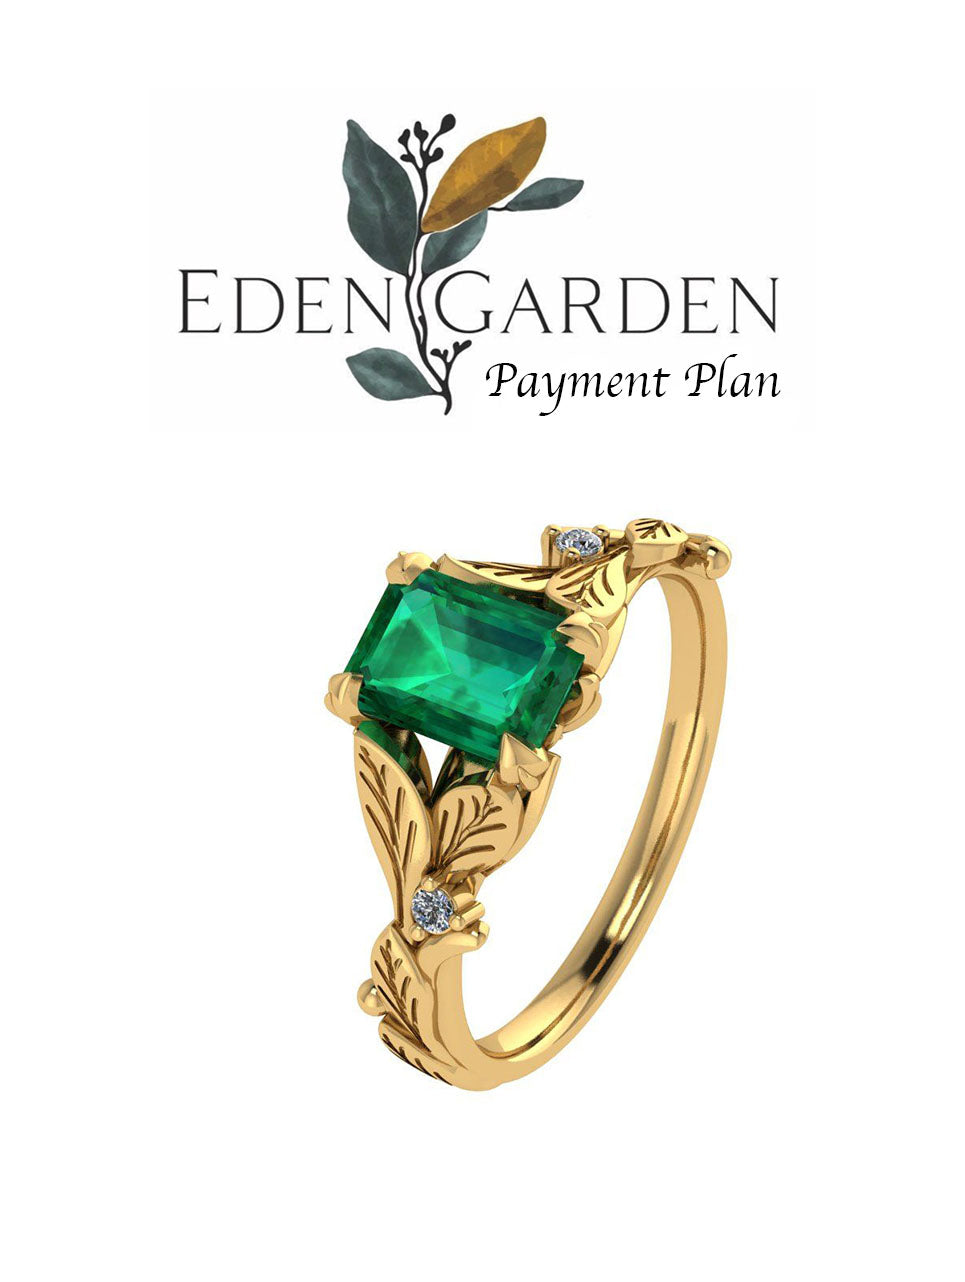 3 installments payment plan for Troy - Eden Garden Jewelry™